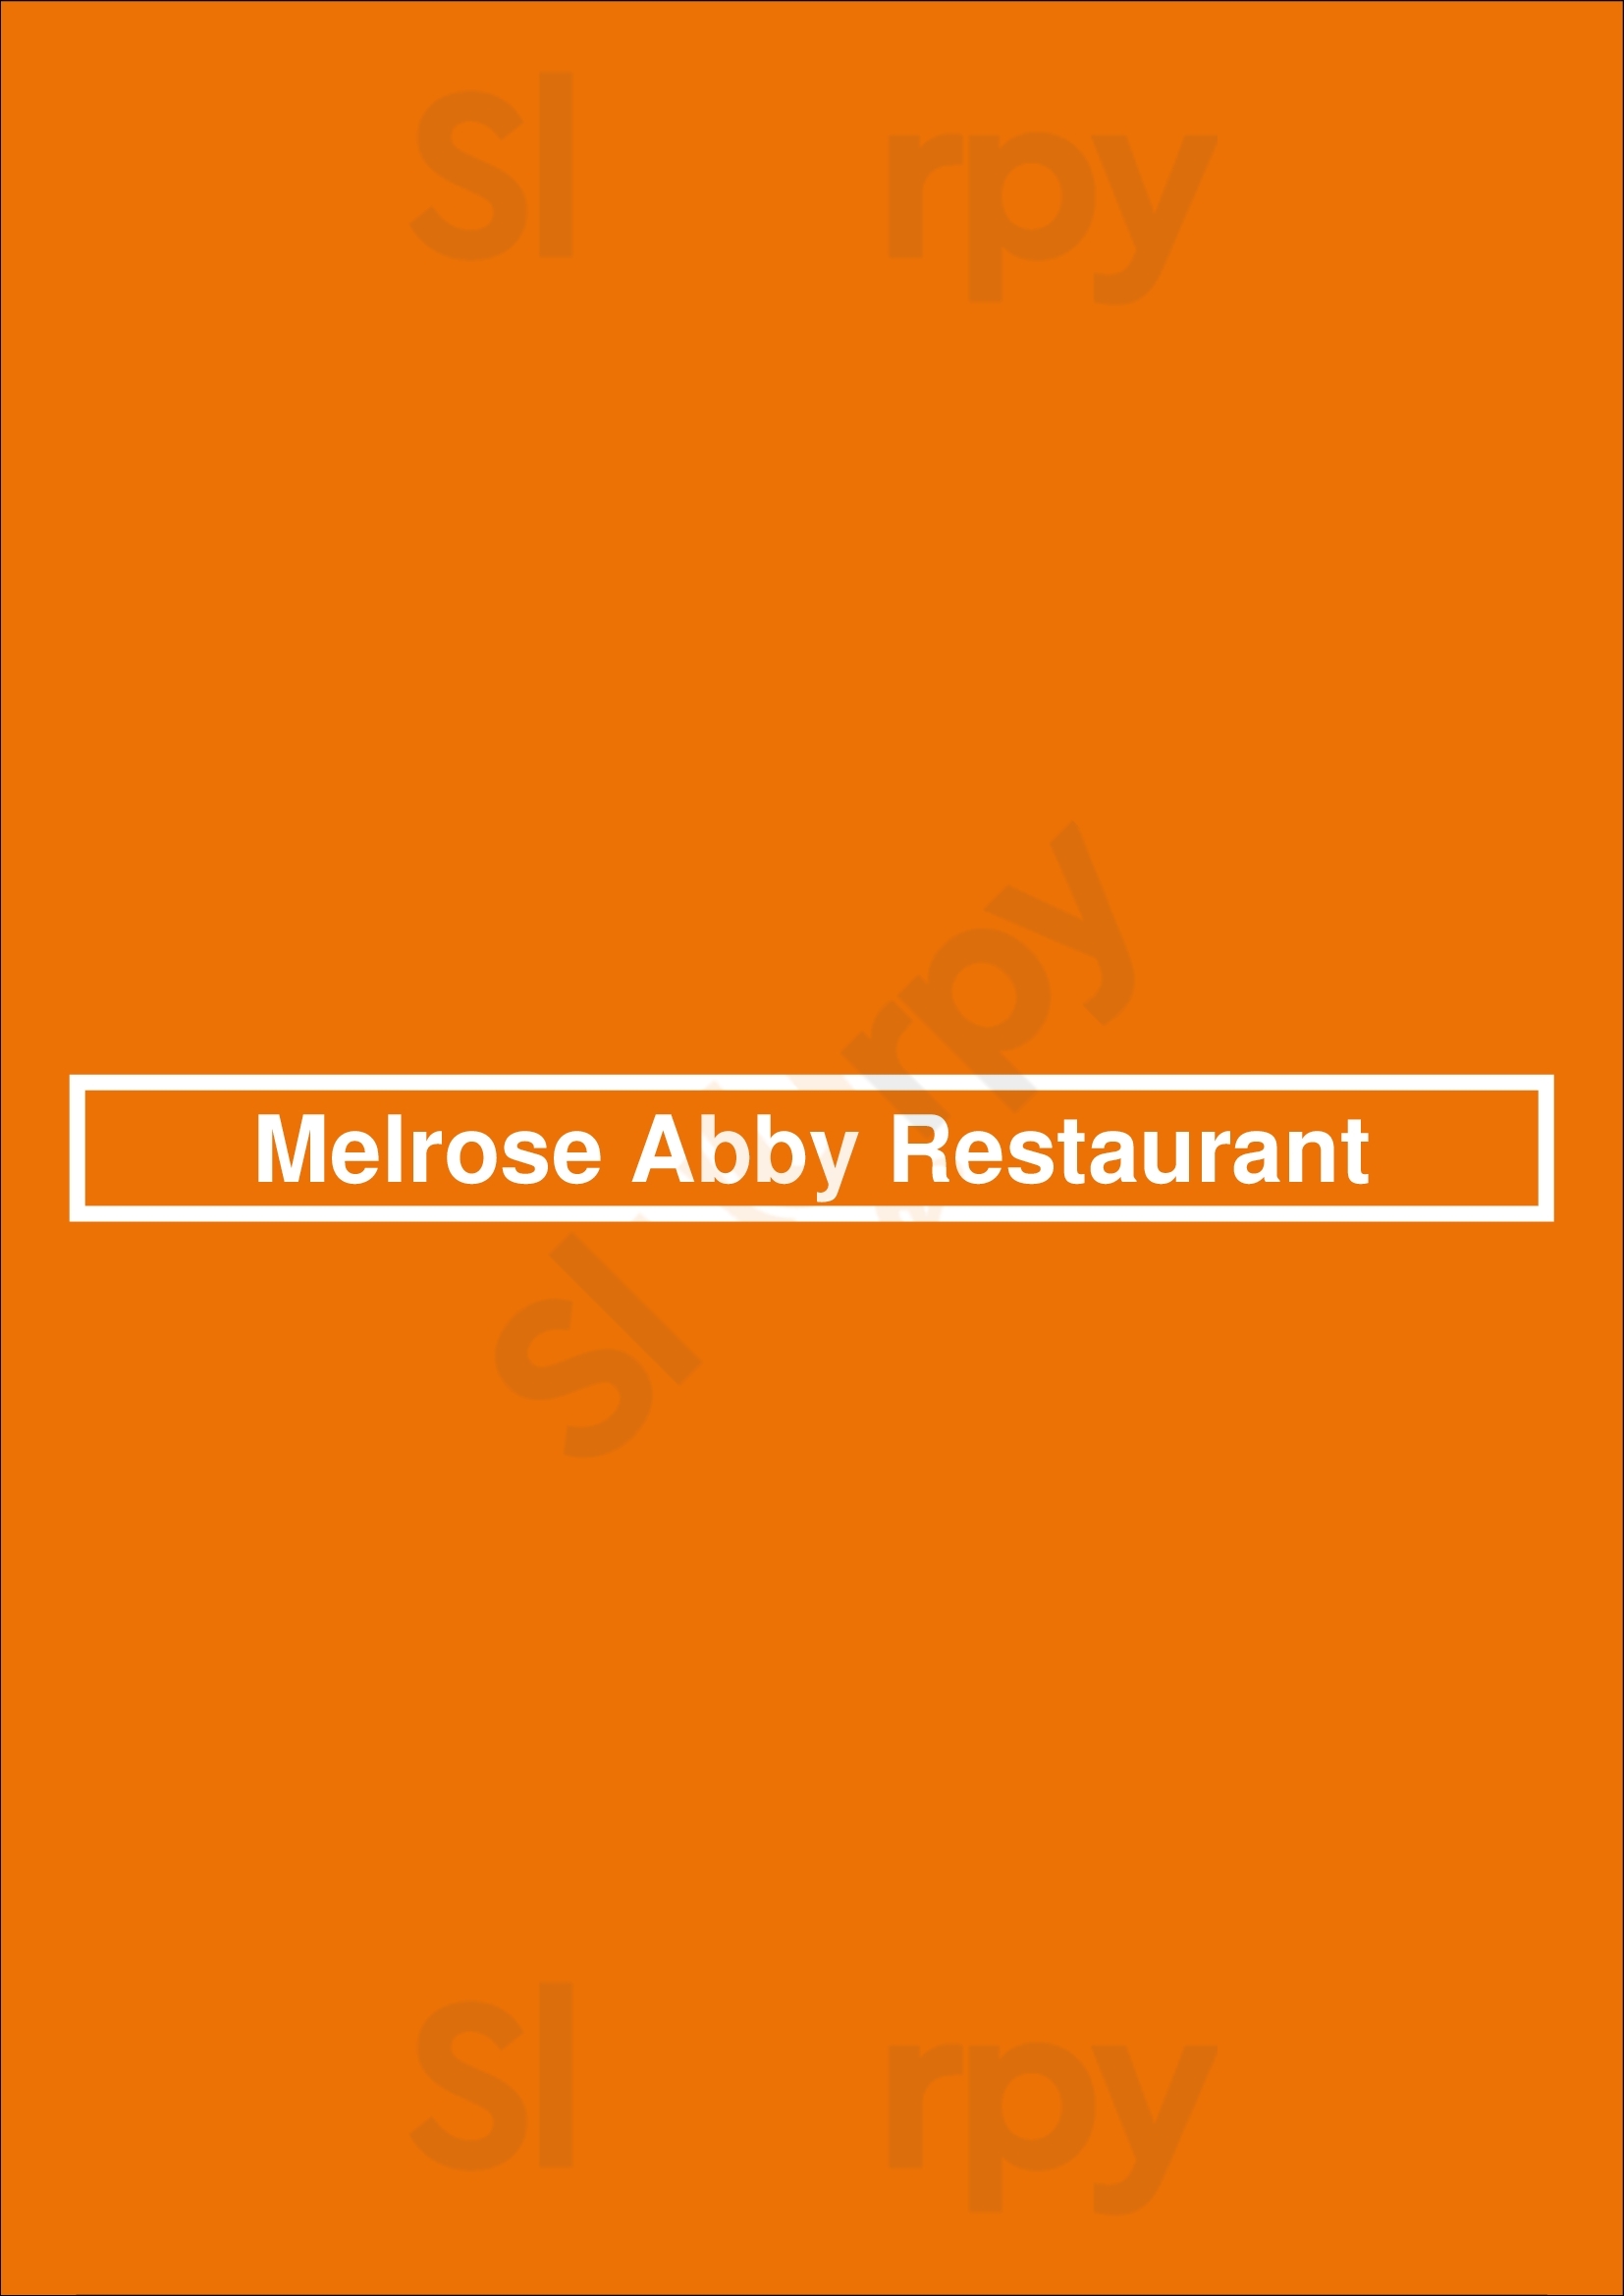 Melrose Abby Restaurant Melrose Menu - 1